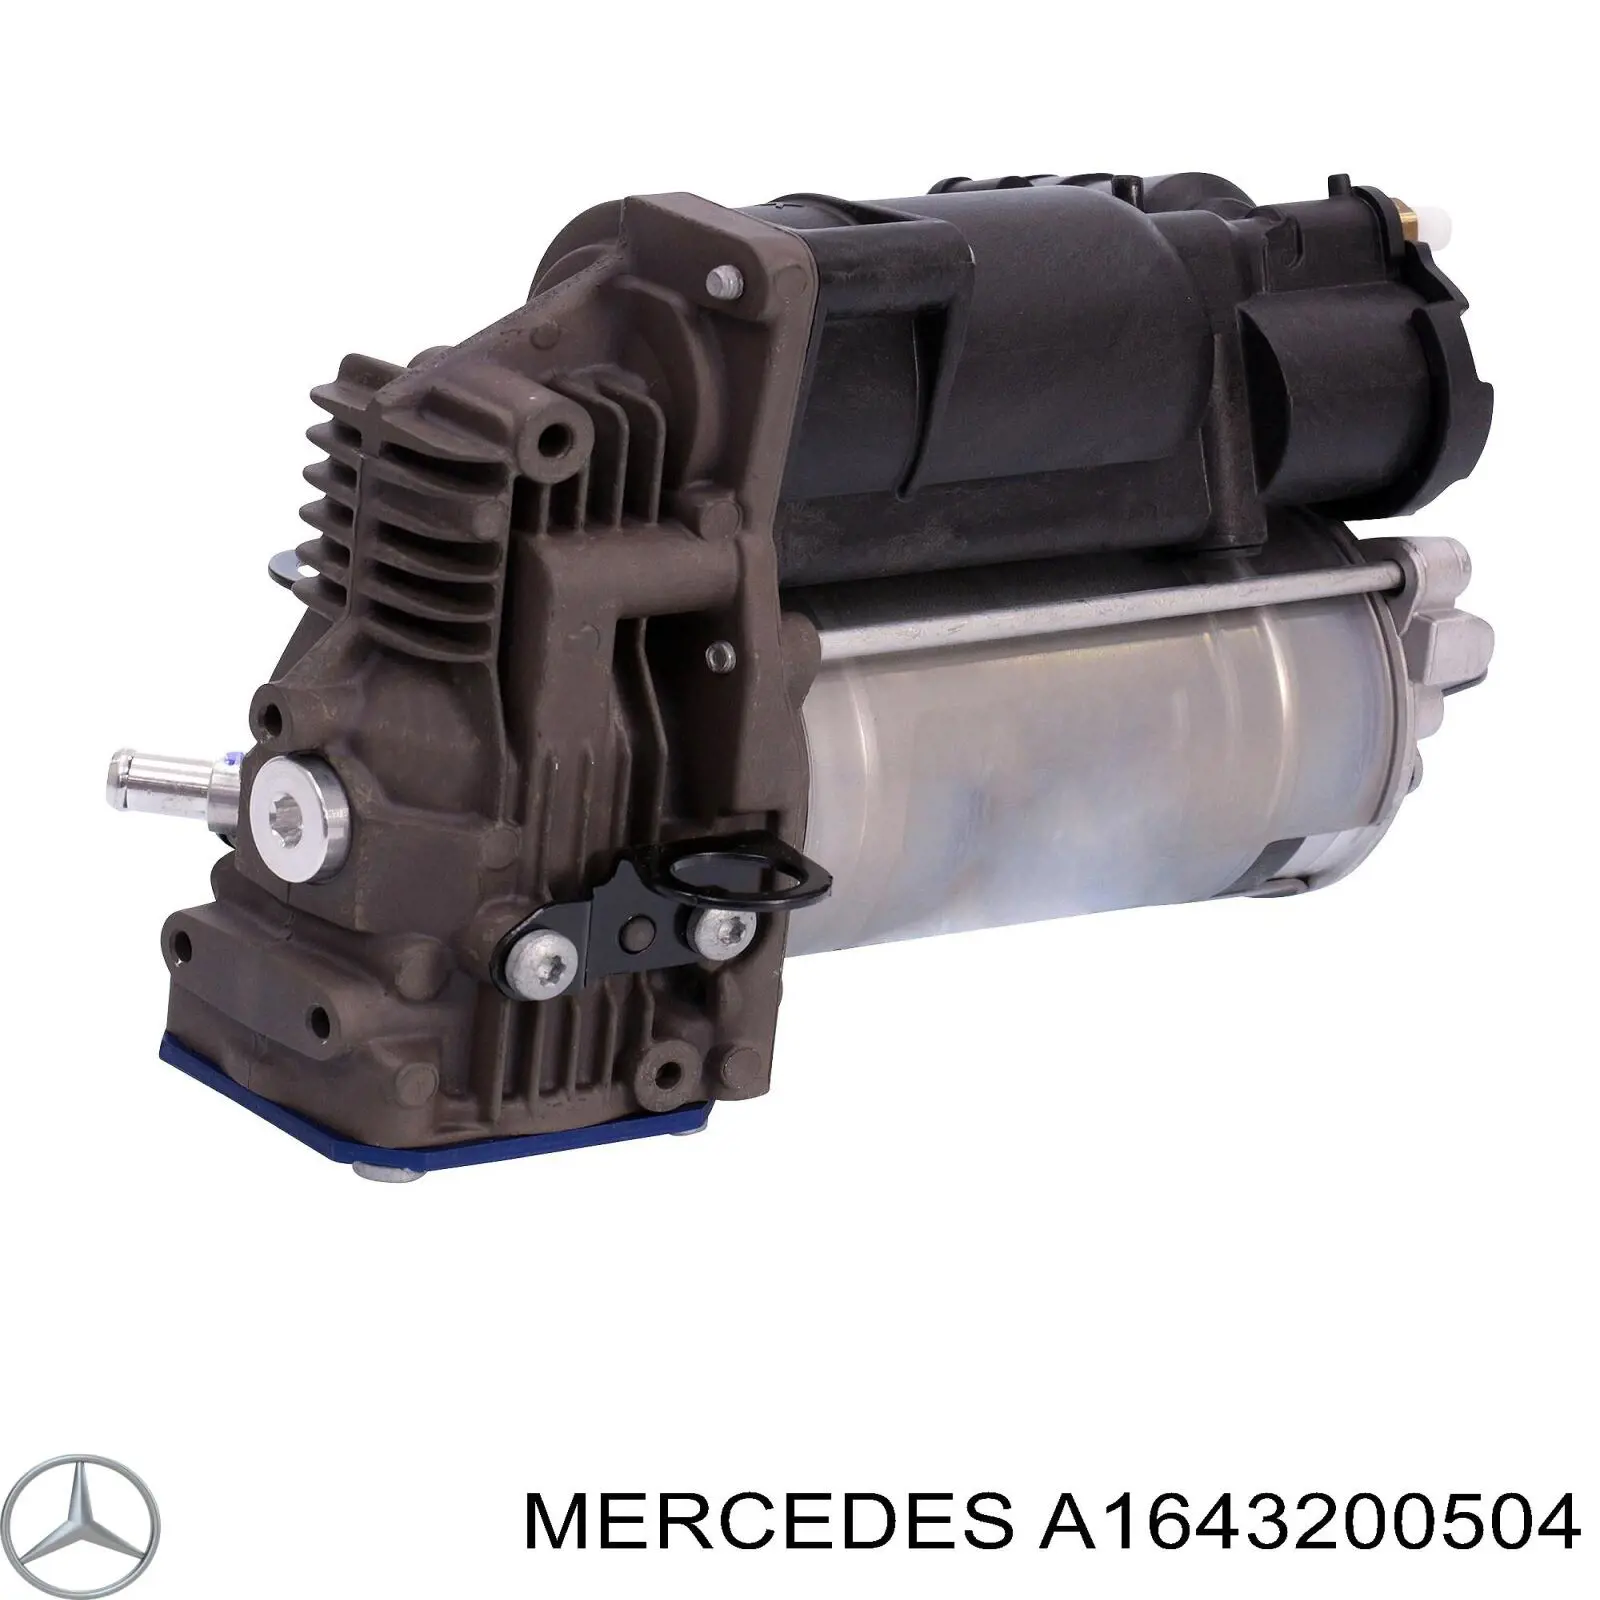 A1643200504 Mercedes компрессор пневмоподкачки (амортизаторов)